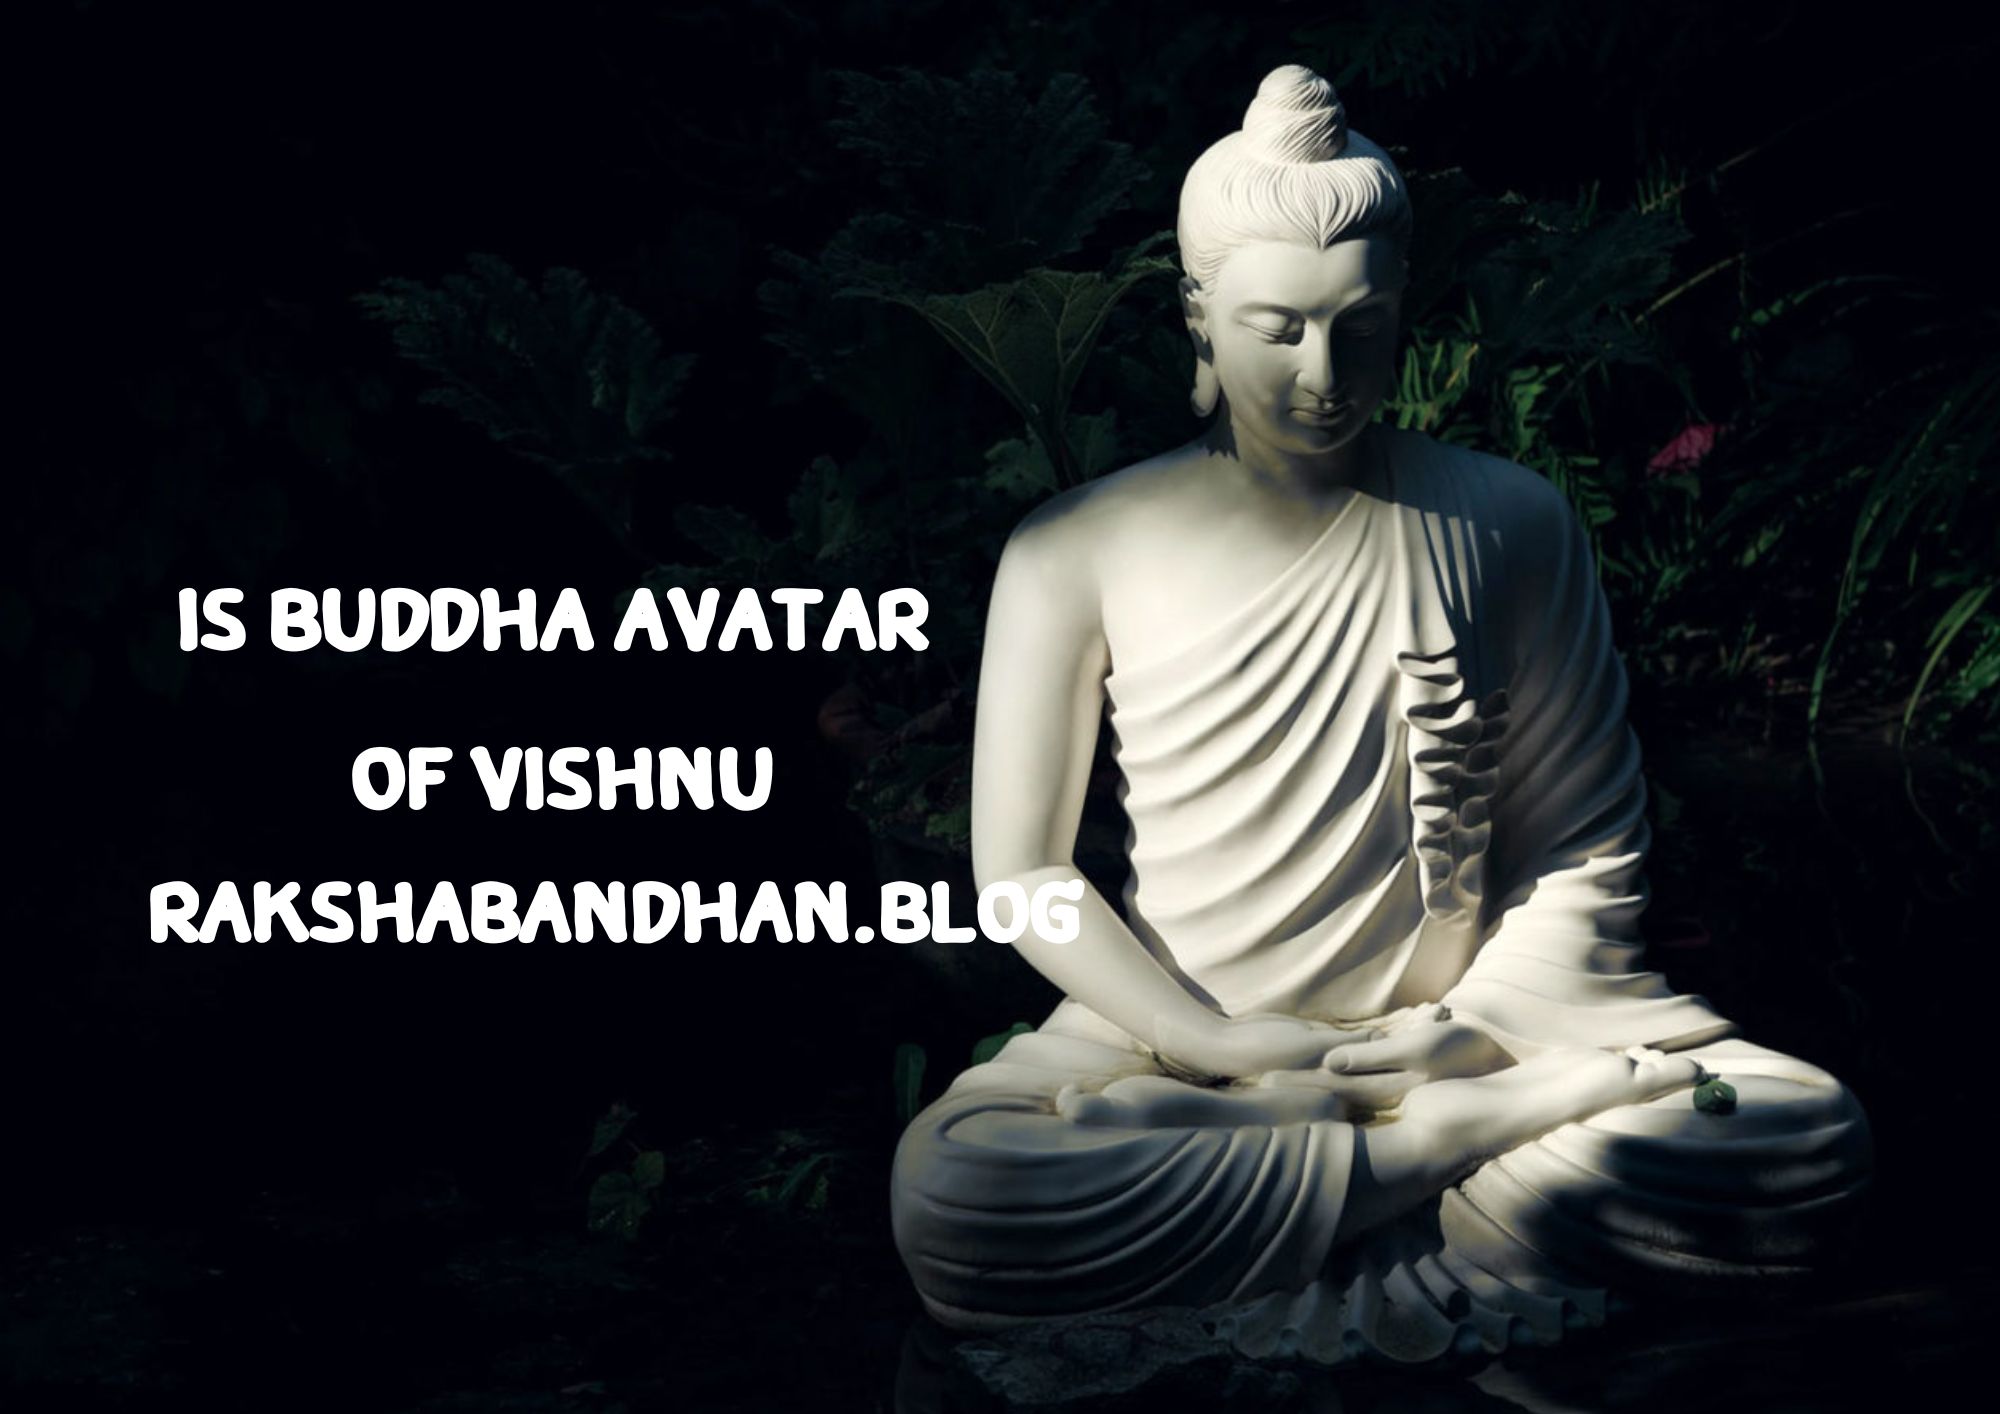 Is Buddha Avatar Of Vishnu (Is Gautam Buddha Avatar Of Vishnu) - Is Gautam Buddha Avatar Of Vishnu, Why Did Vishnu Take Buddha Avatar